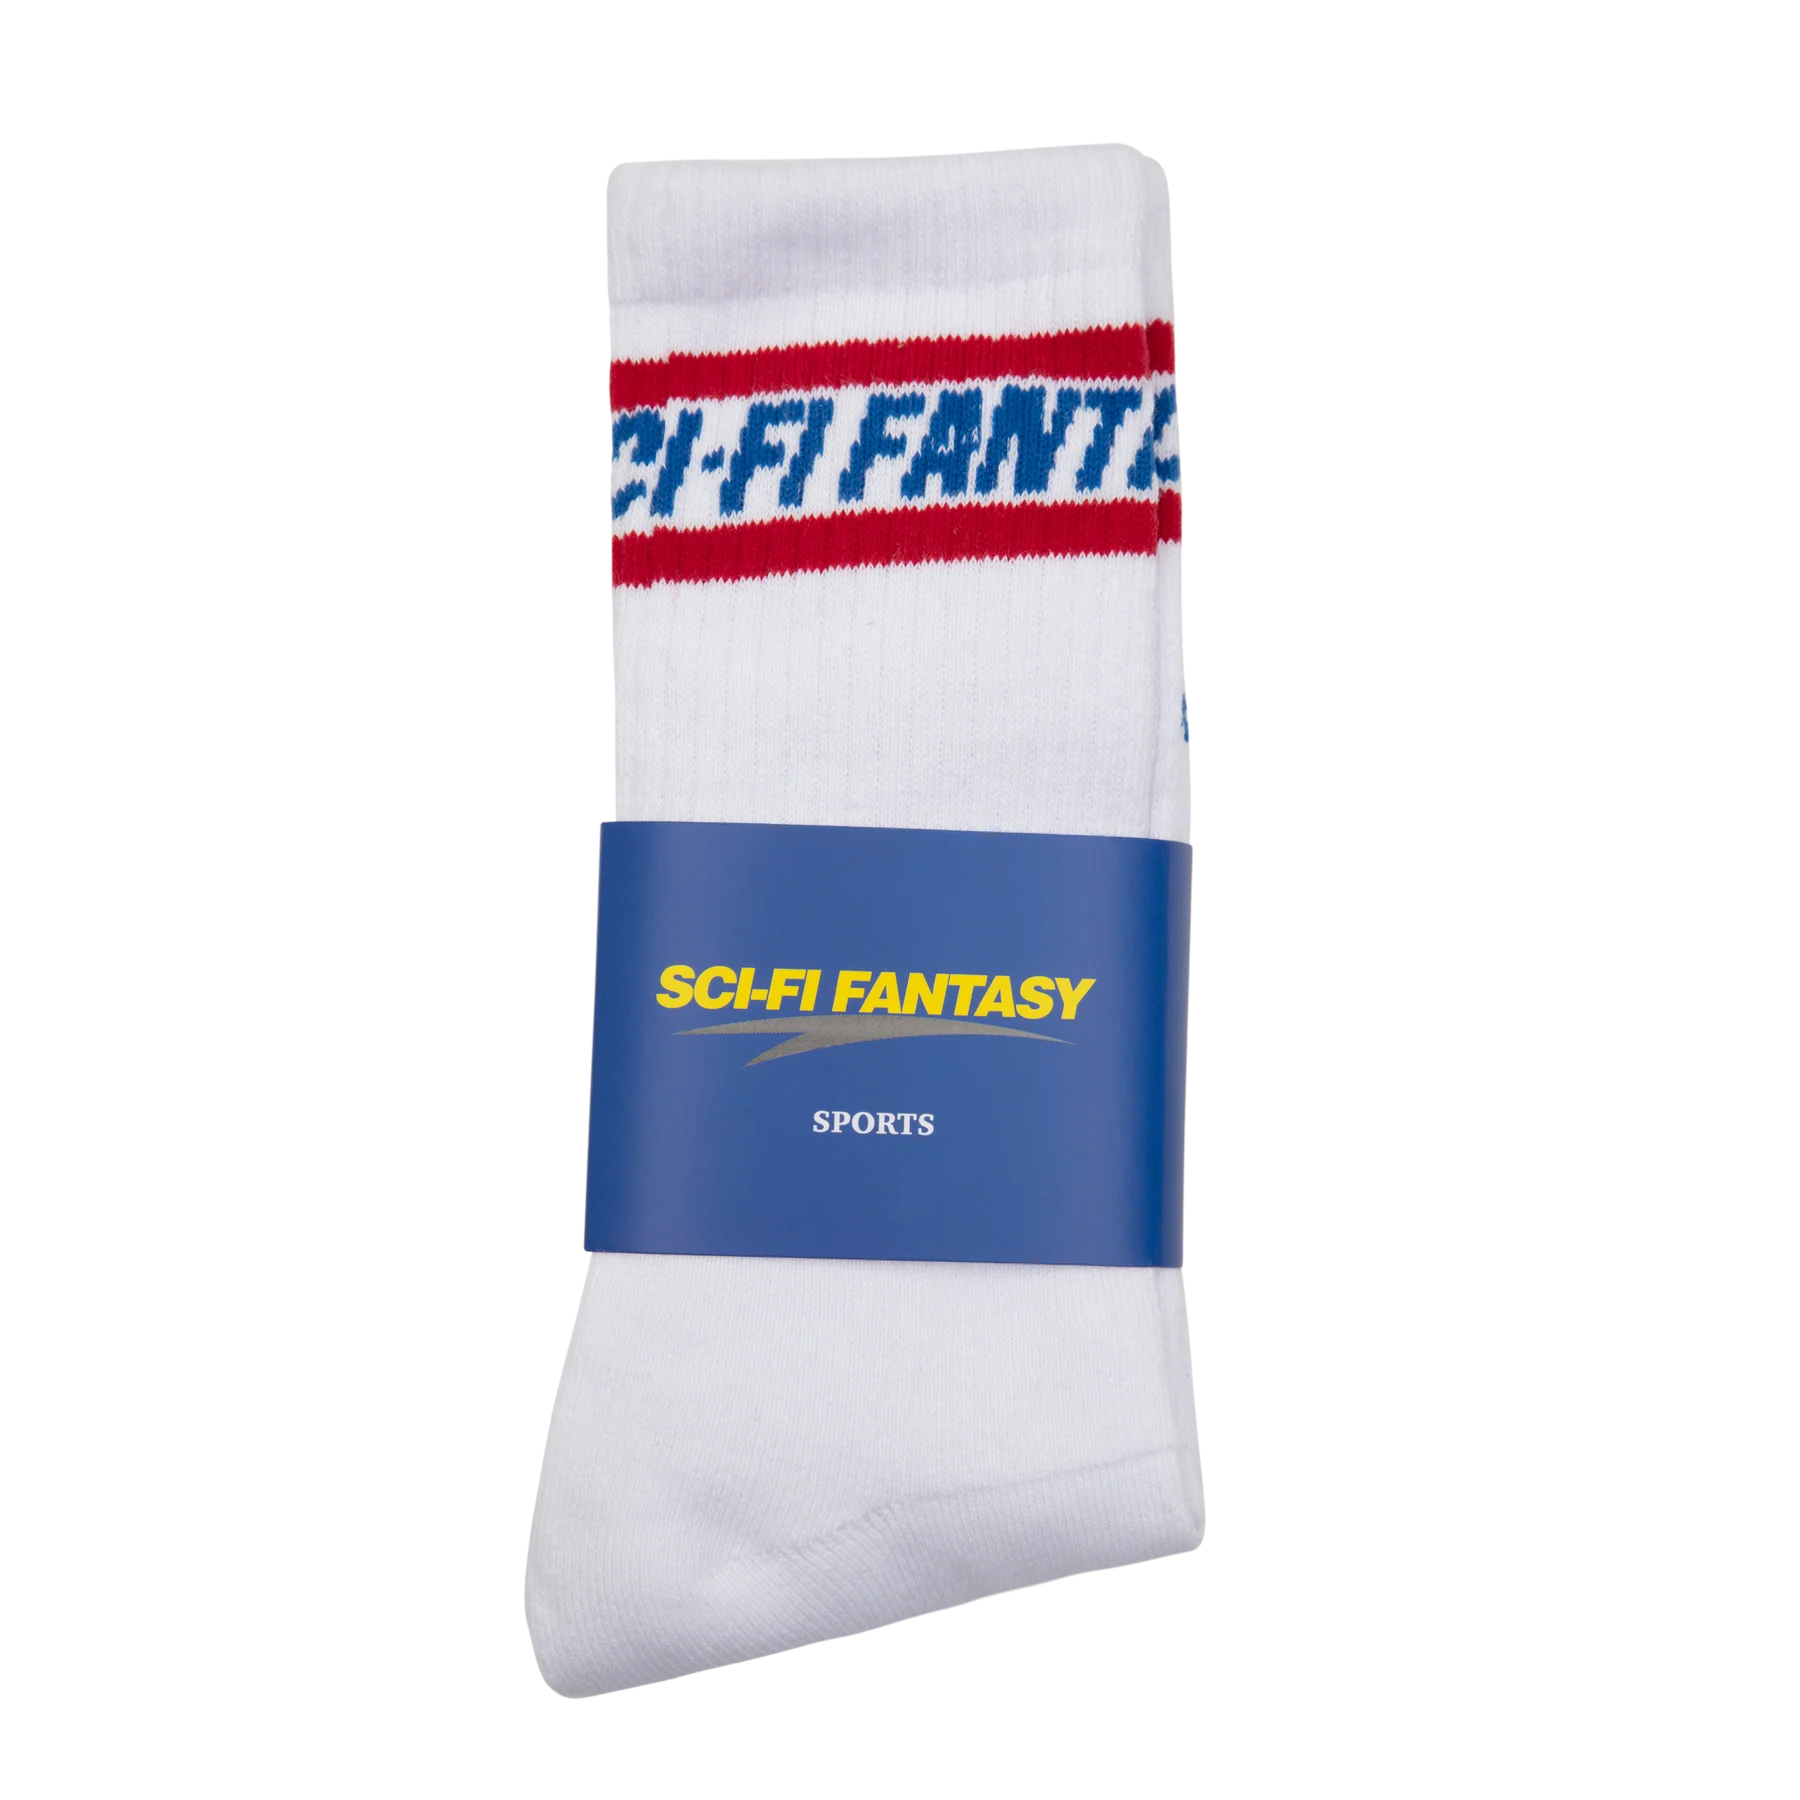 Sci-Fi Fantasy Spiritual Guidance Socks - White